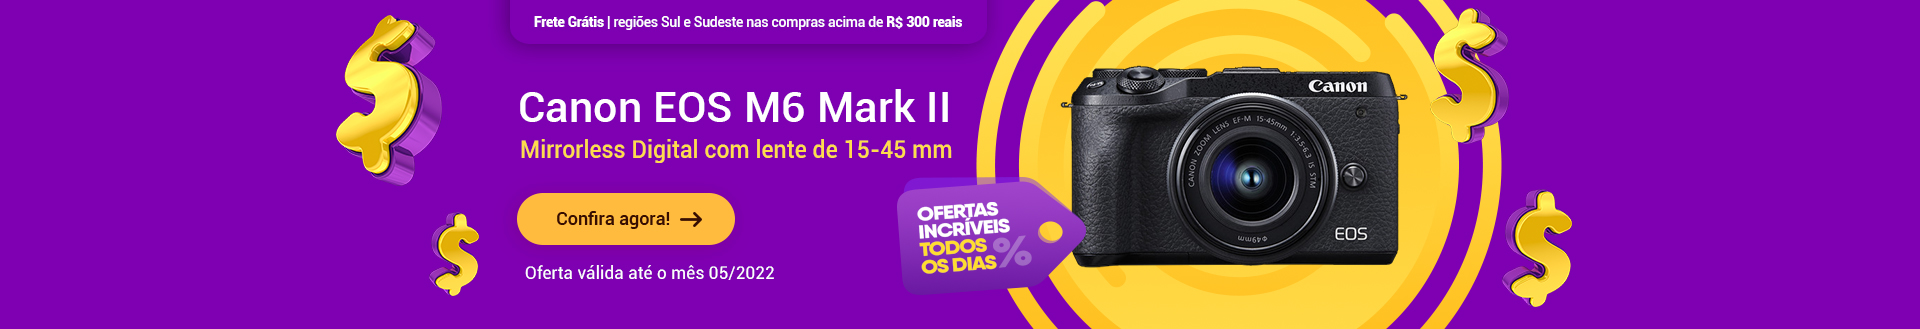 Super Ofertas Maio 2022 - Canon EOS M6 Mark II